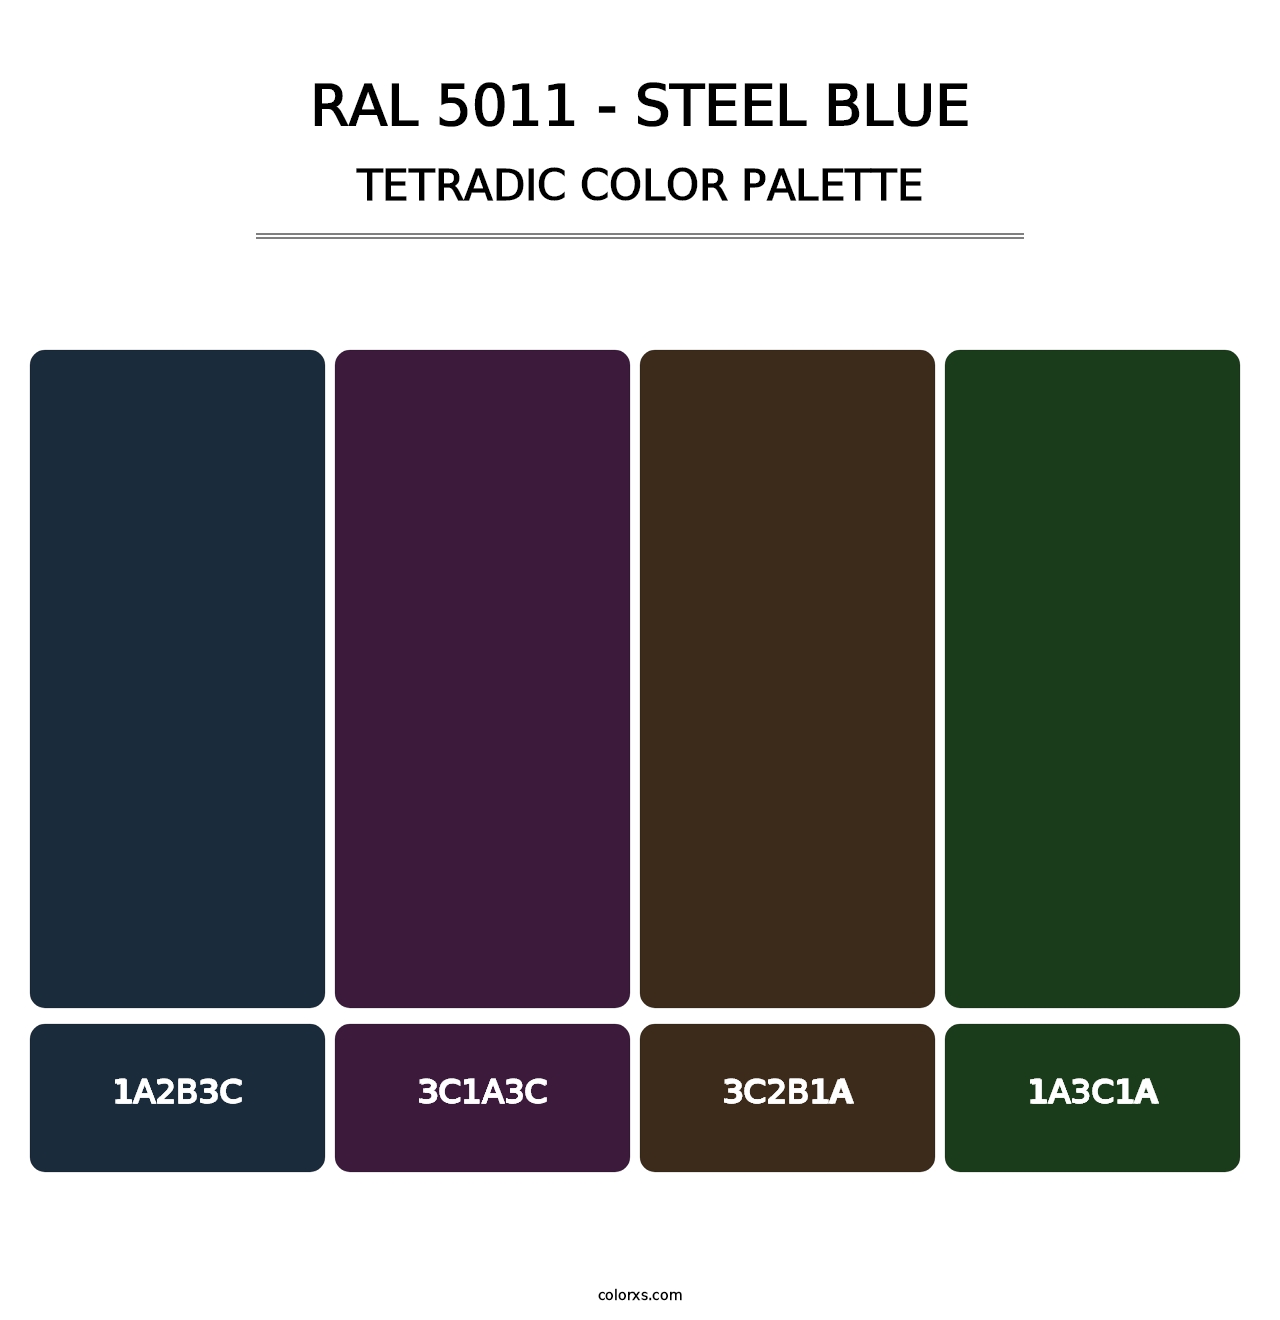 RAL 5011 - Steel Blue - Tetradic Color Palette